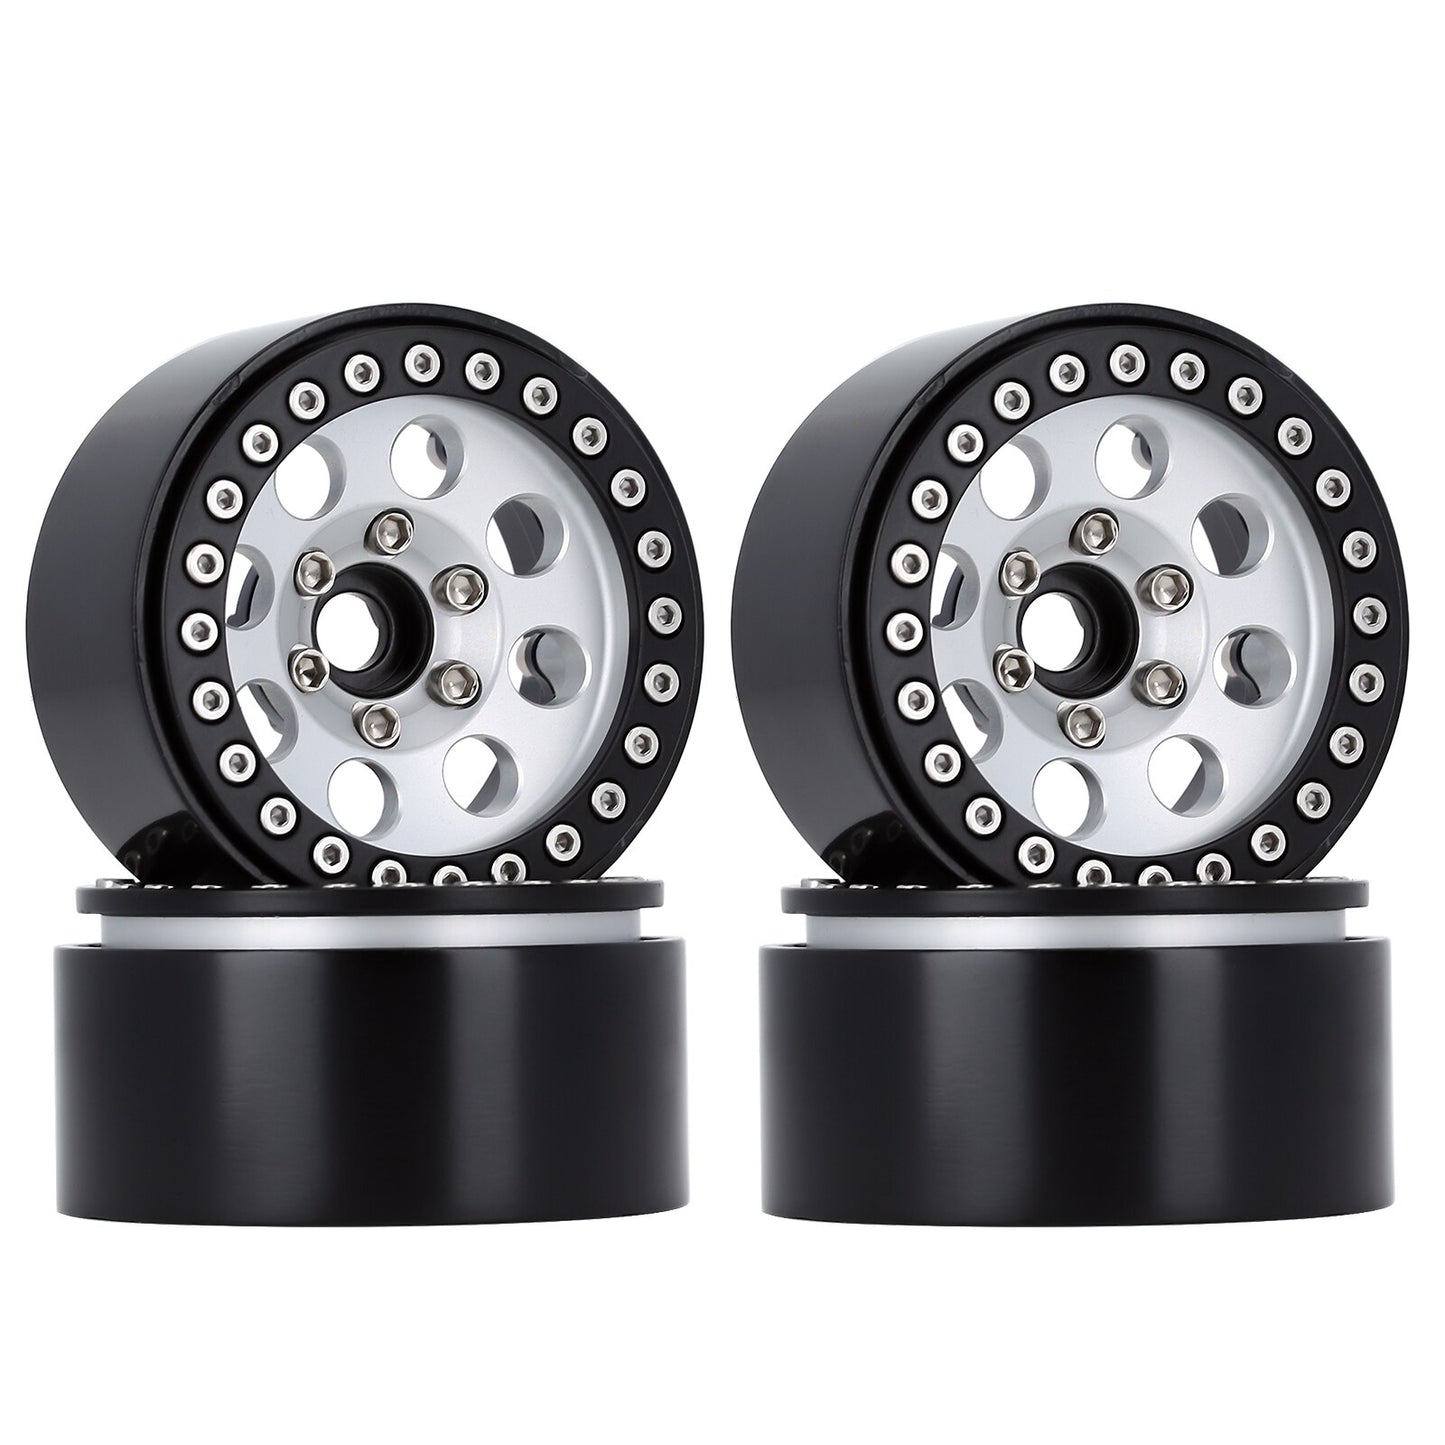 INJORA 4PCS 1.9 Metal Beadlock 8 Round Hole Wheel Hub Rim for 1/10 RC Crawler Axial SCX10 90046 AXI03007 TRX4 RedCat D90